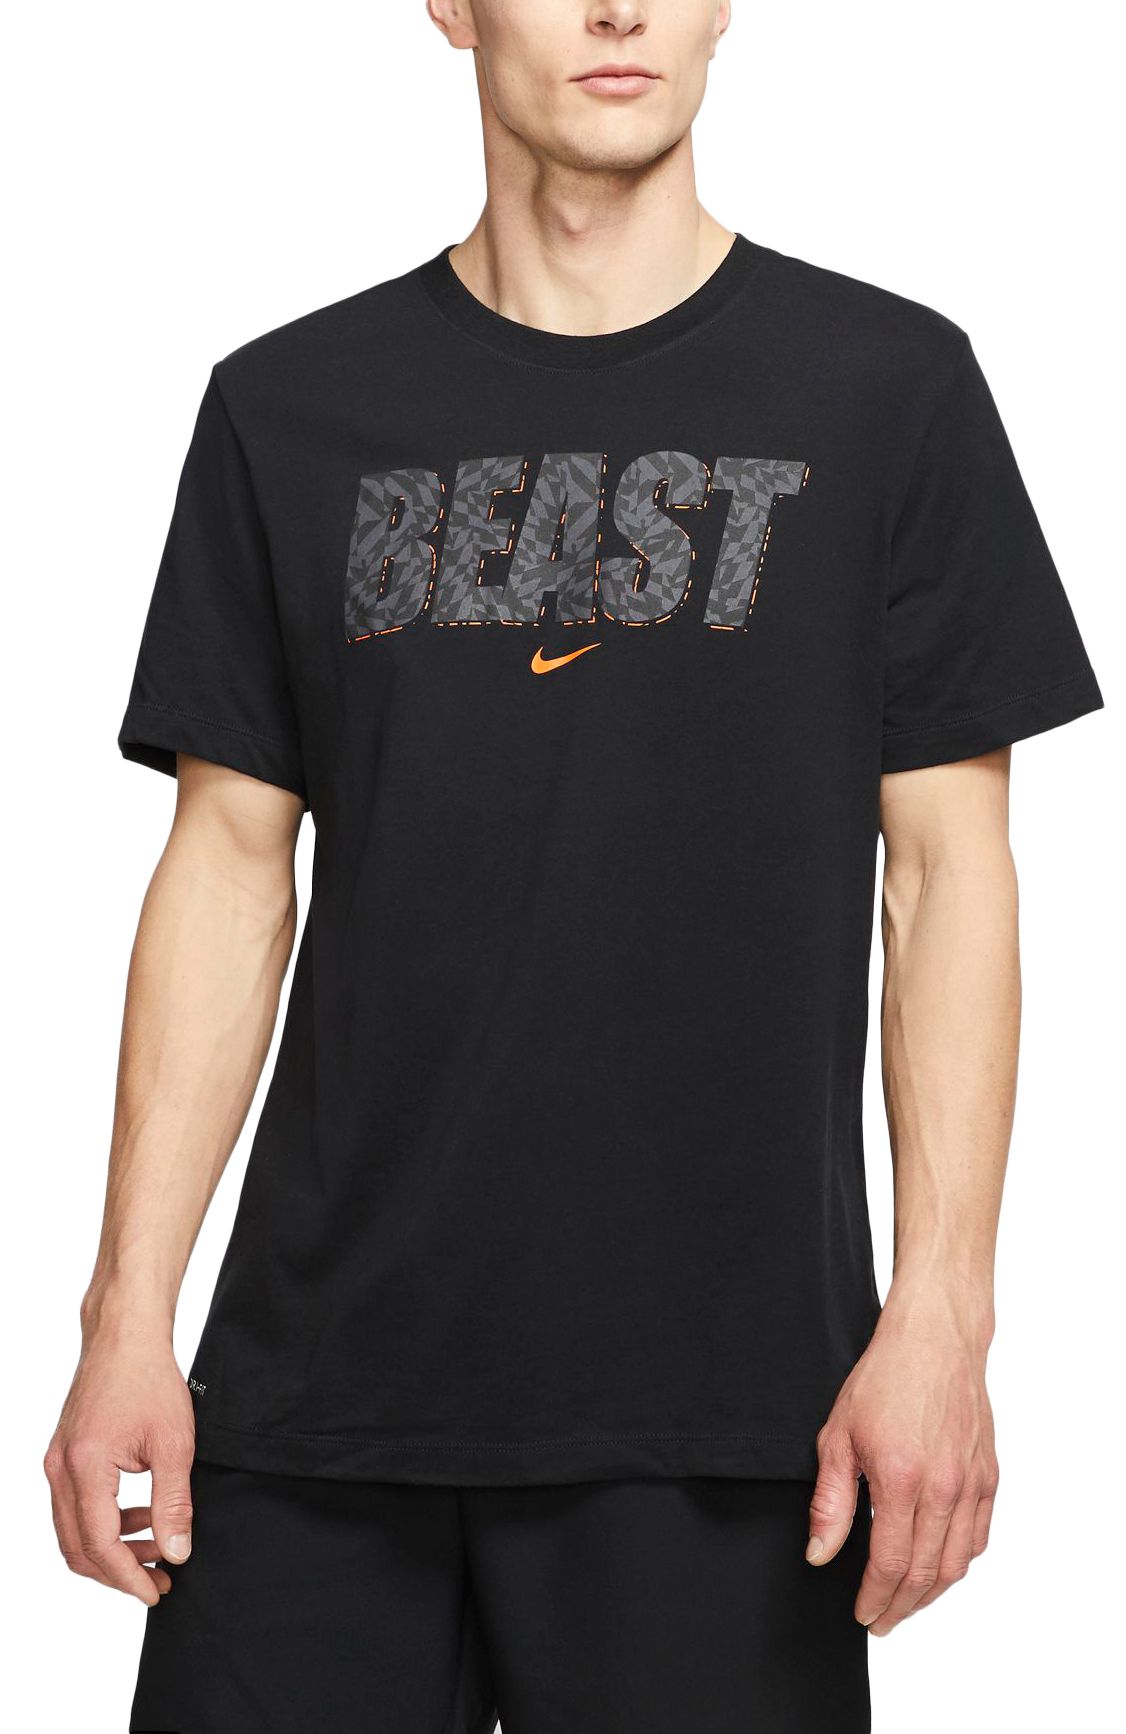 beast mode t shirt nike